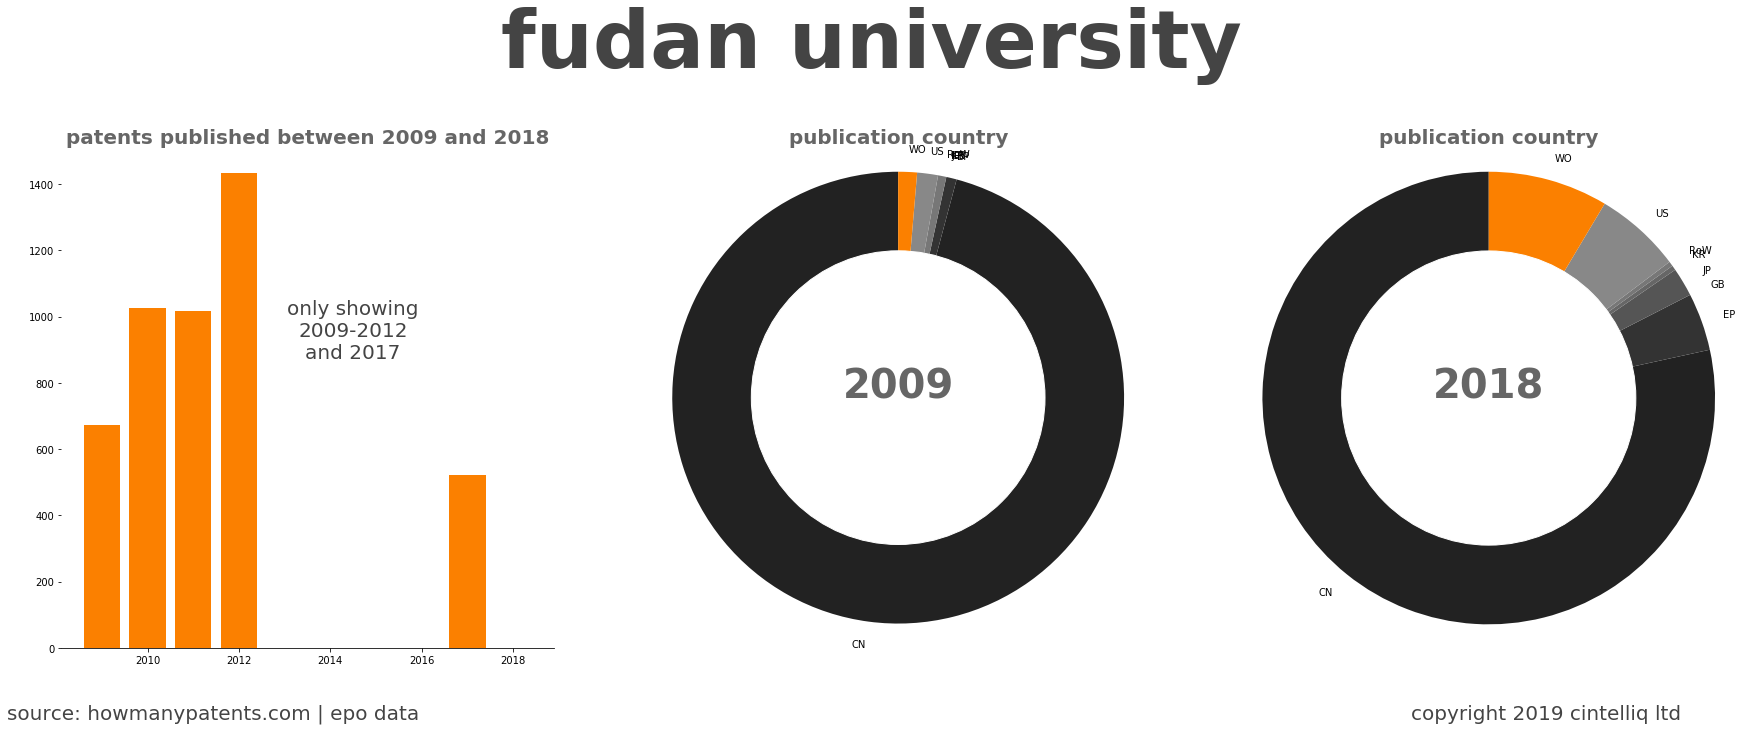 summary of patents for Fudan University